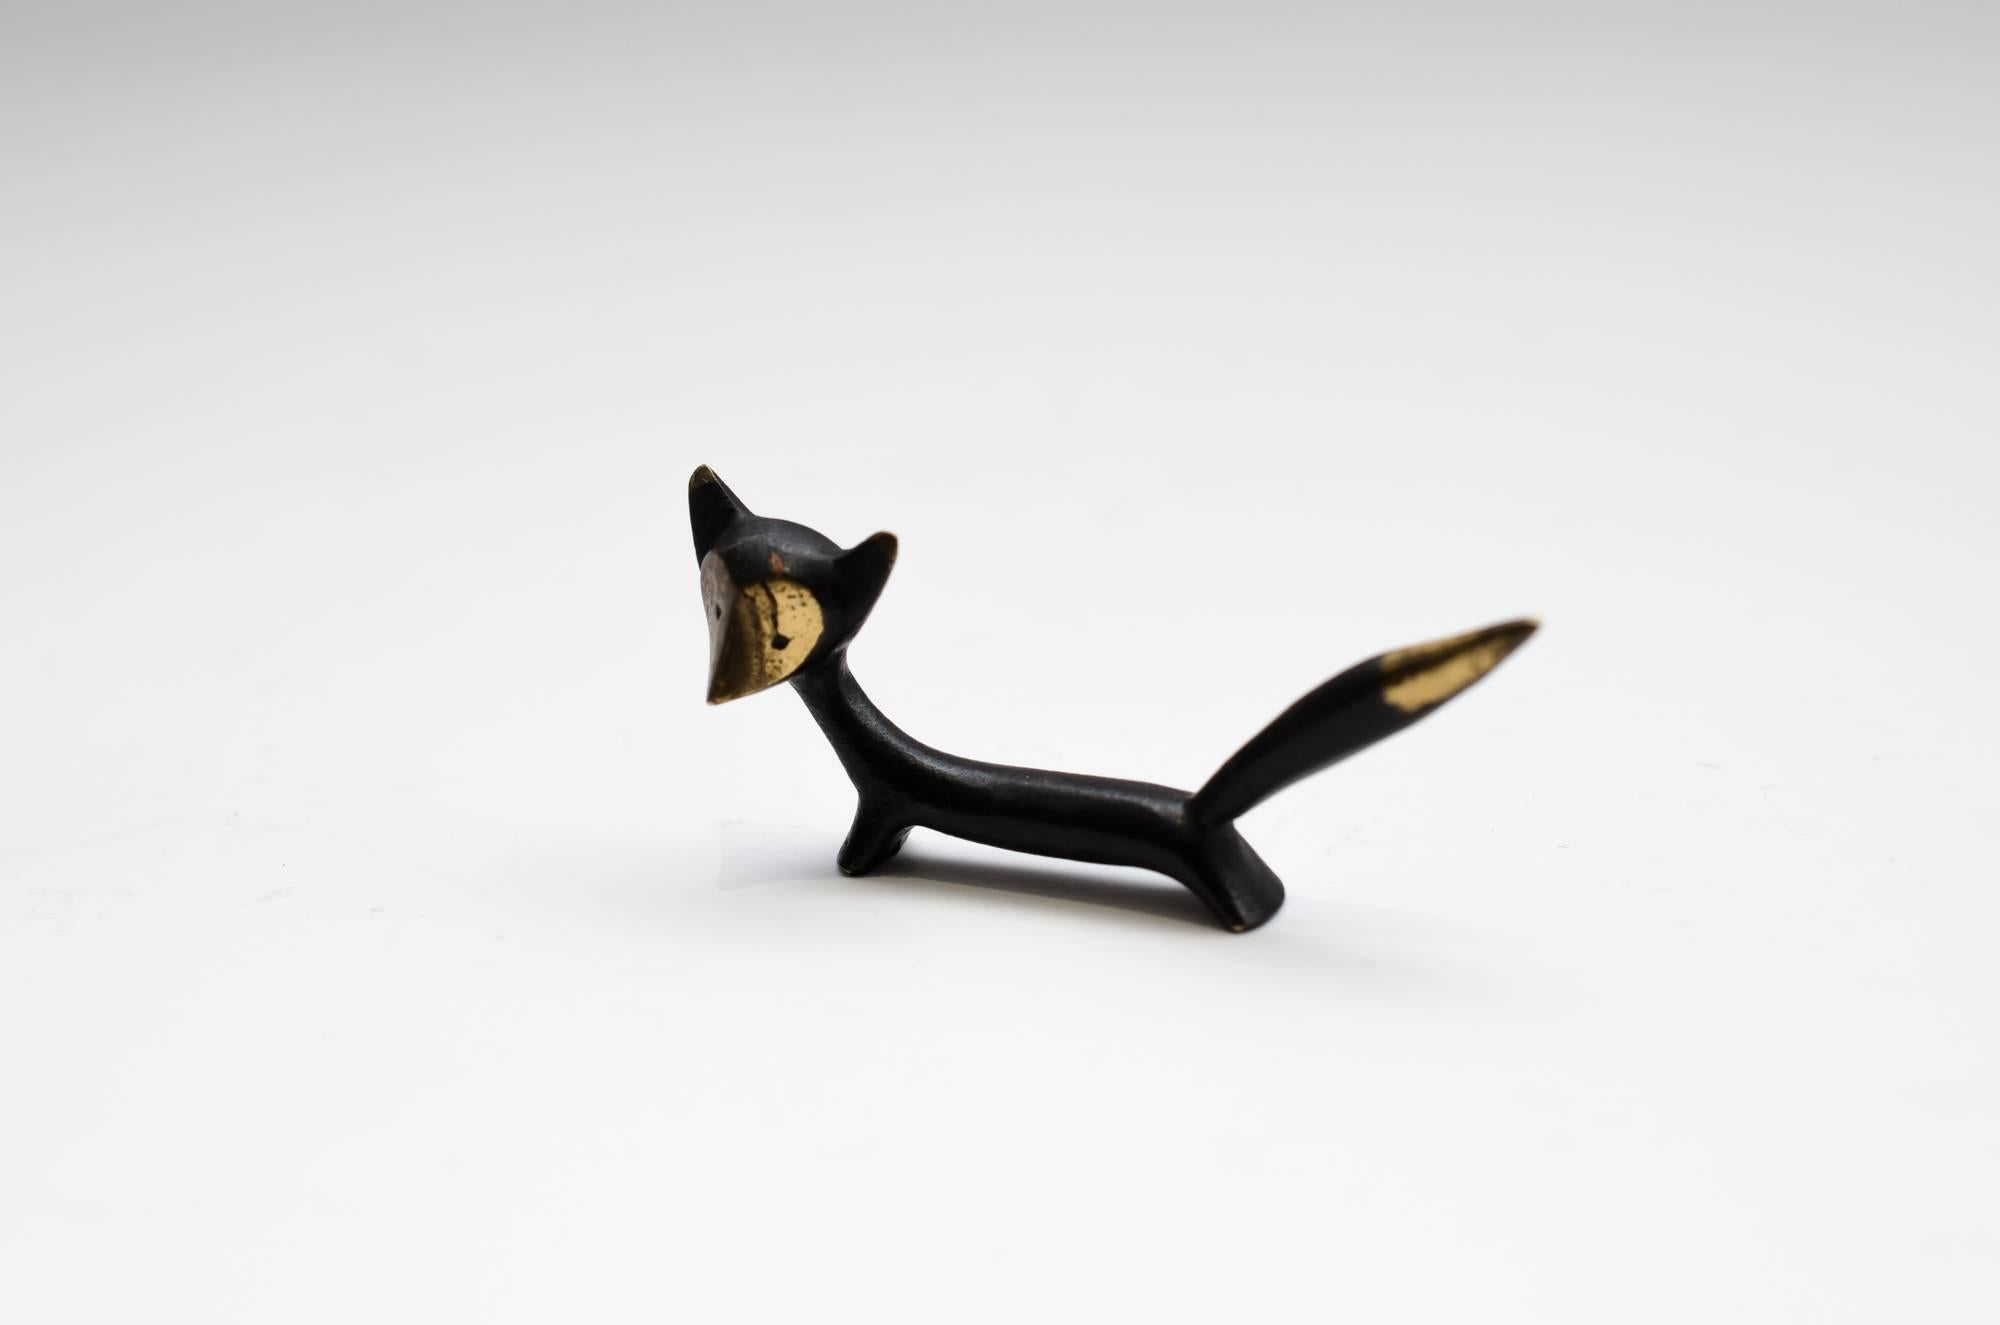 Small fox figurine by Walter Bosse
Original condition.